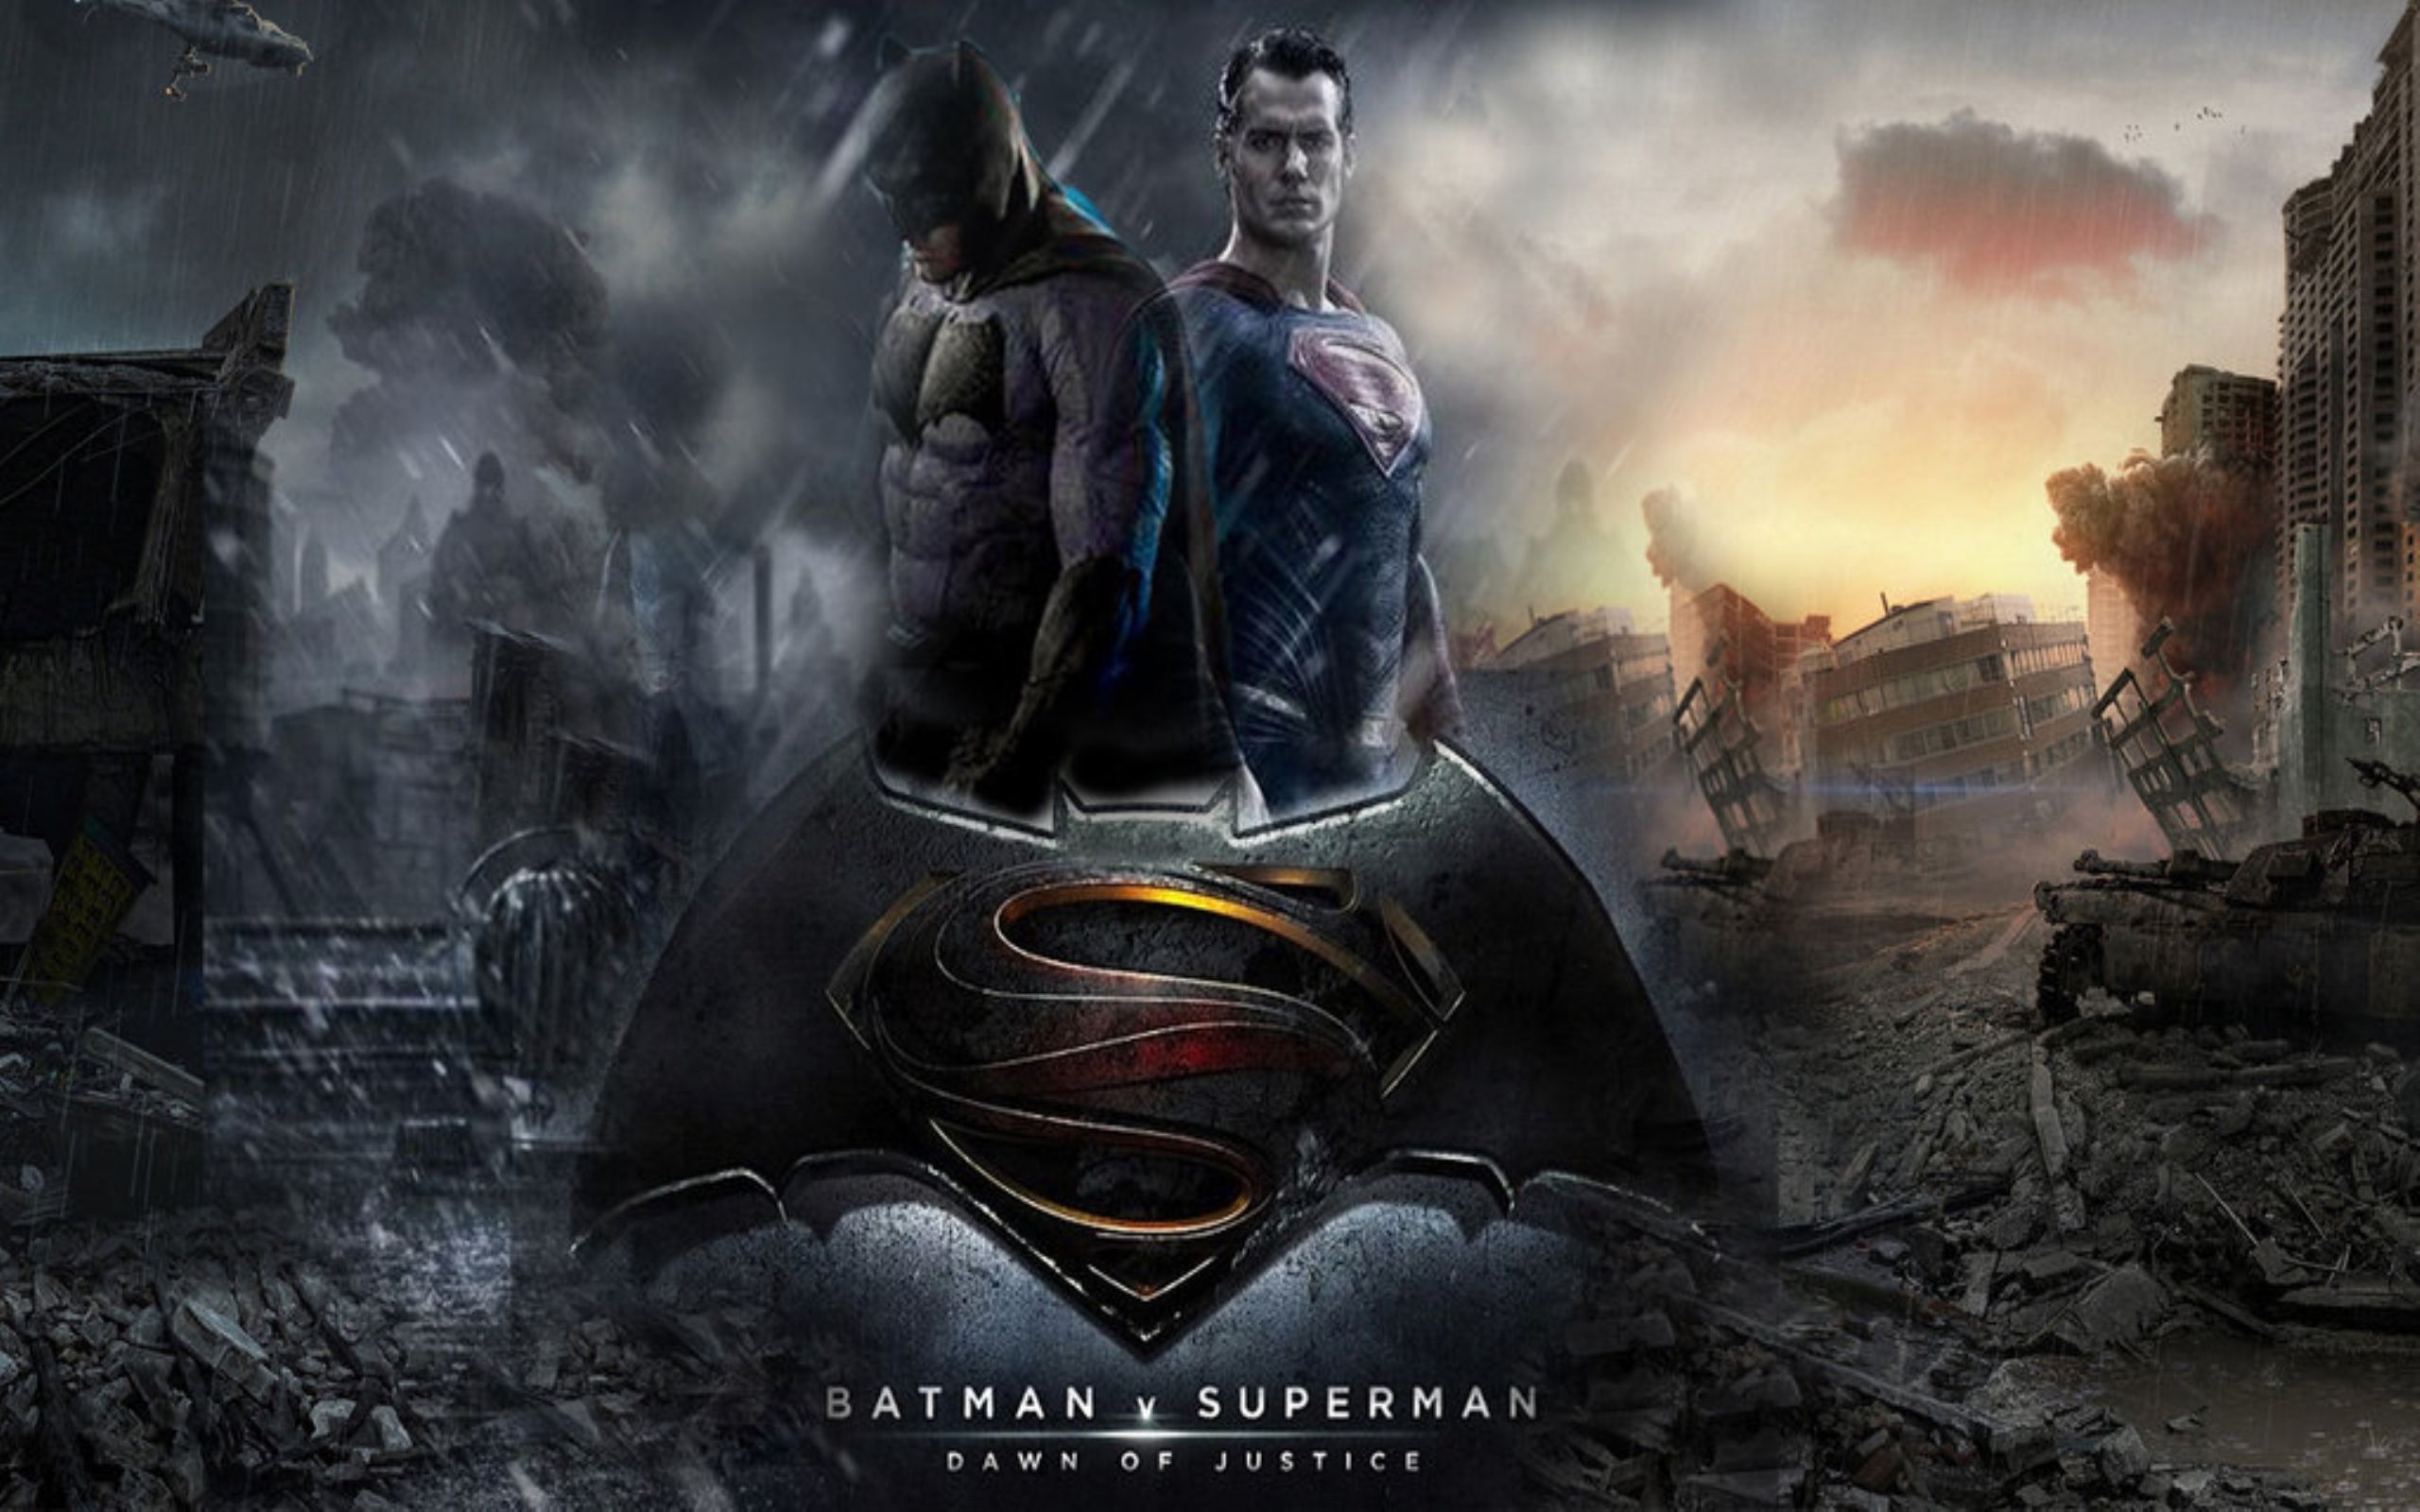 Download Download Batman Vs Superman Wallpaper For Android #eabP0